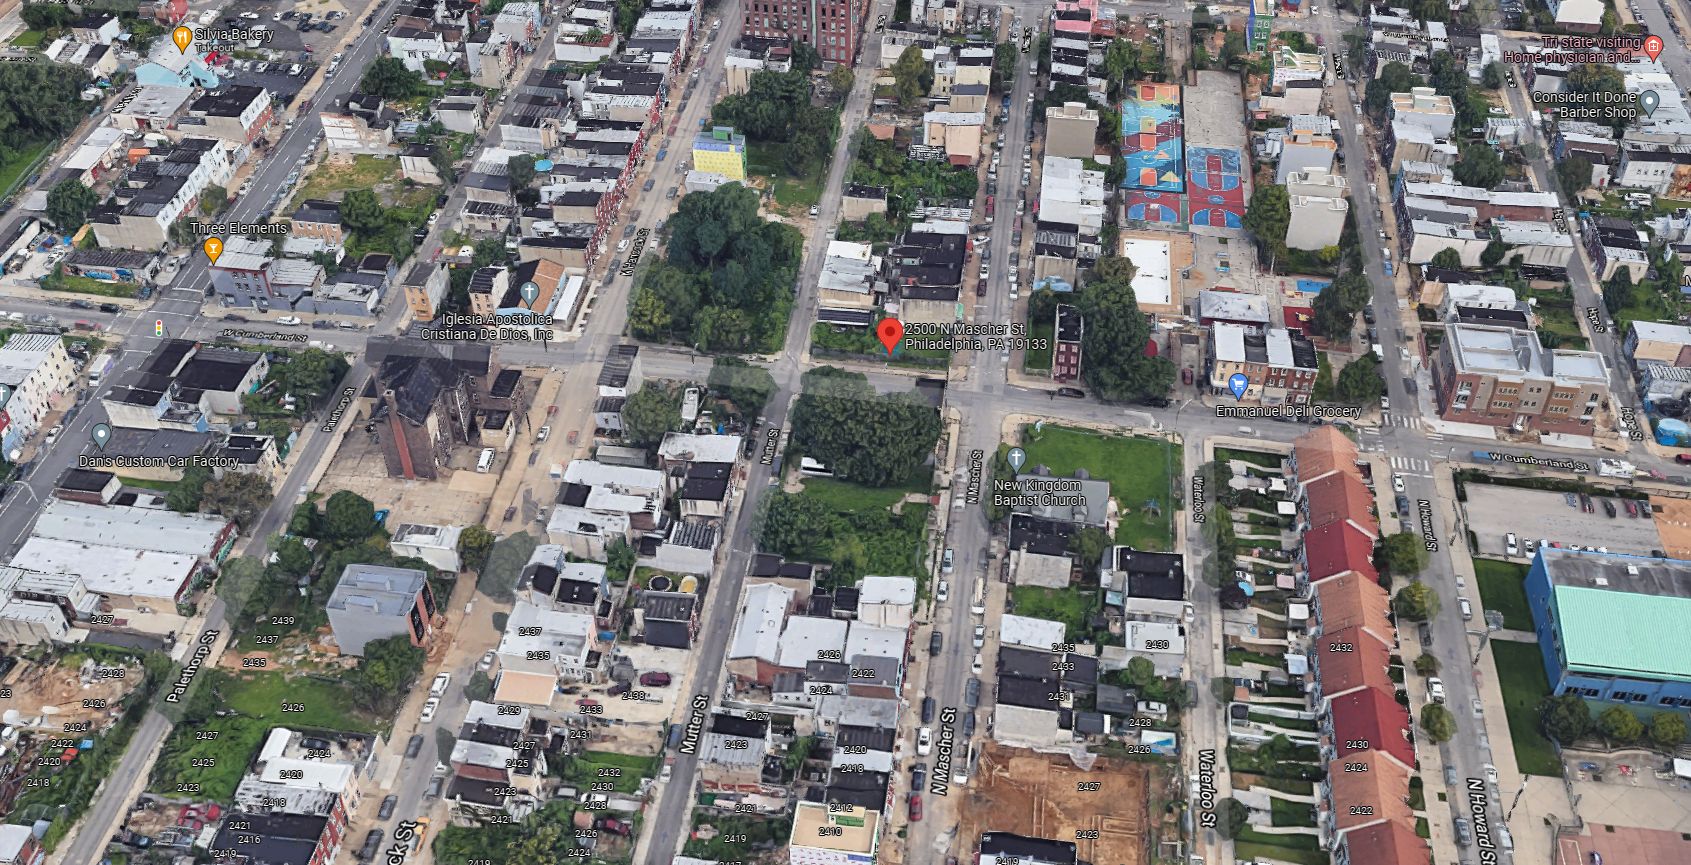 2500 North Mascher Street. Looking north. Credit: Google Maps